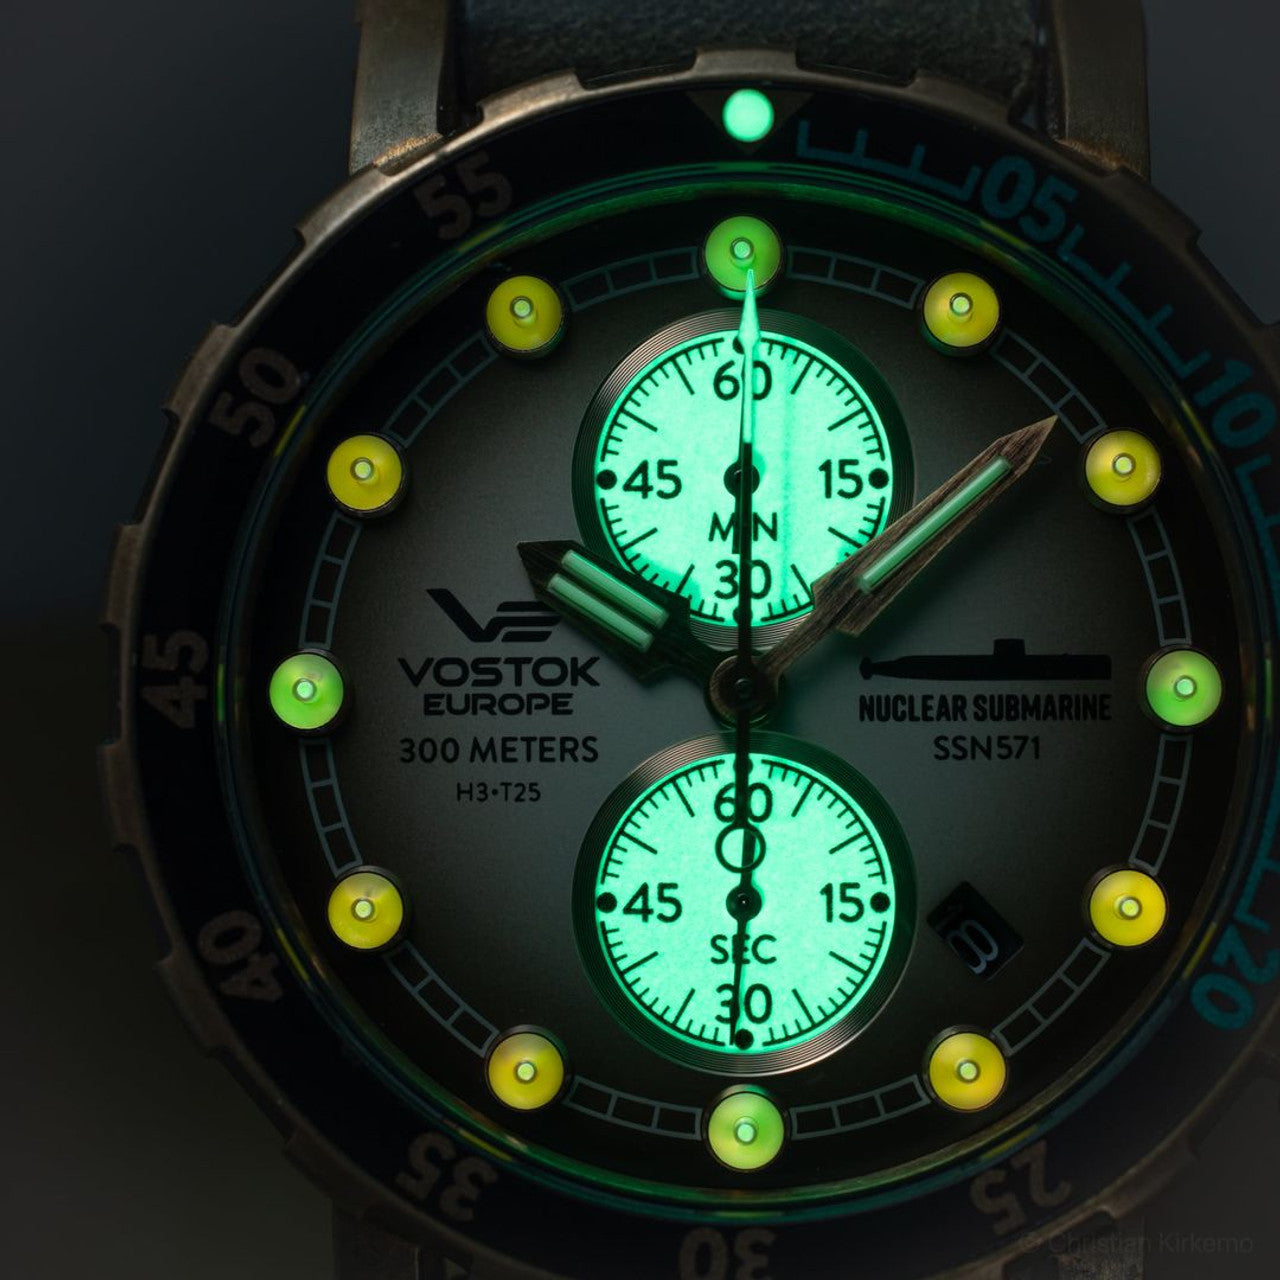 Vostok-Europe SSN 571 Mecha-Quartz Chronograph Submarine Watch on Bracelet (VK61/571F612B)